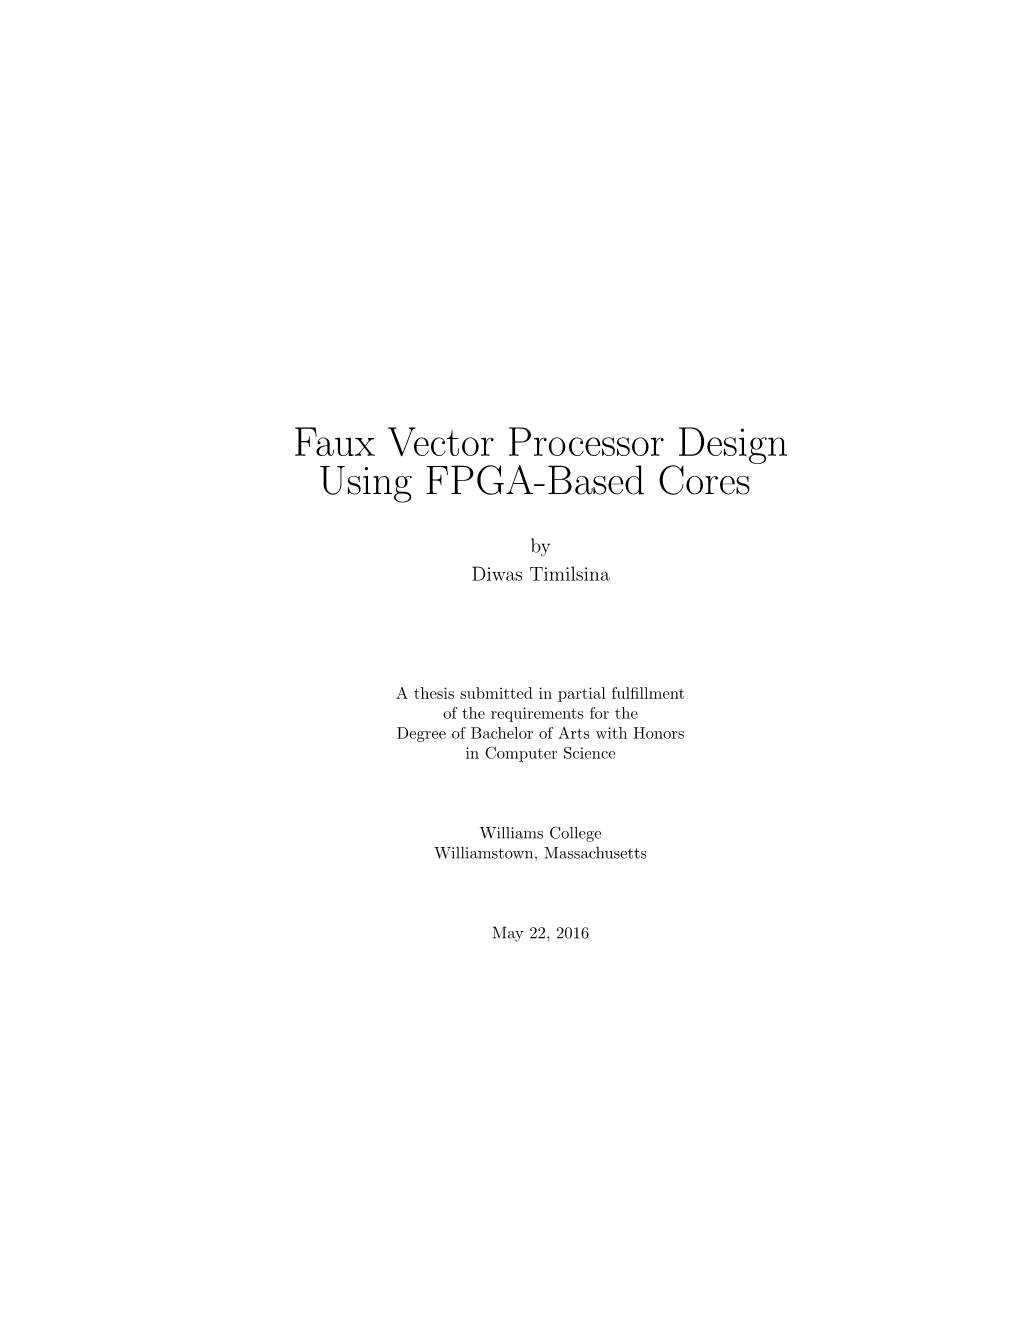 Faux Vector Processor Design Using FPGA-Based Cores